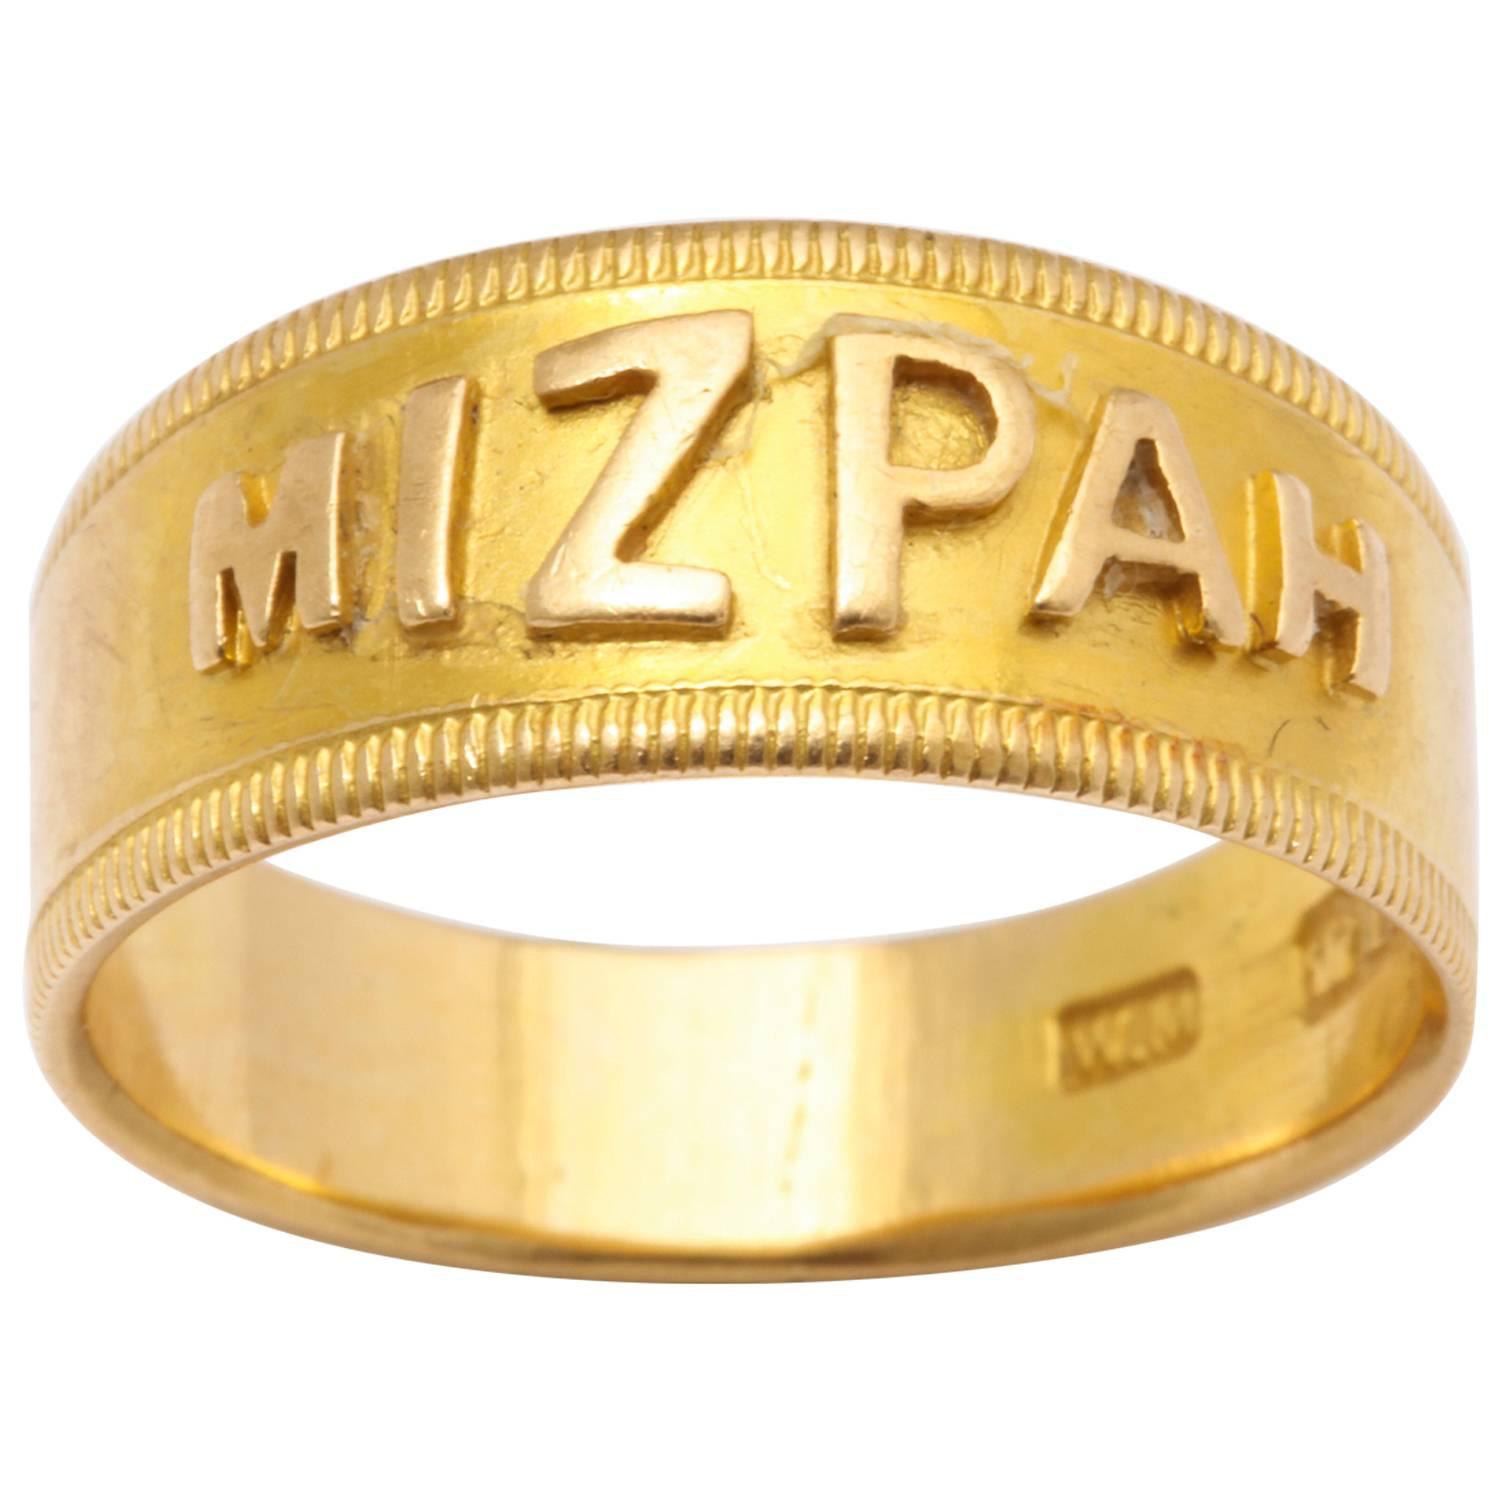 Mizpah 18 Karat Gold Hallmarked Ring, circa 1870